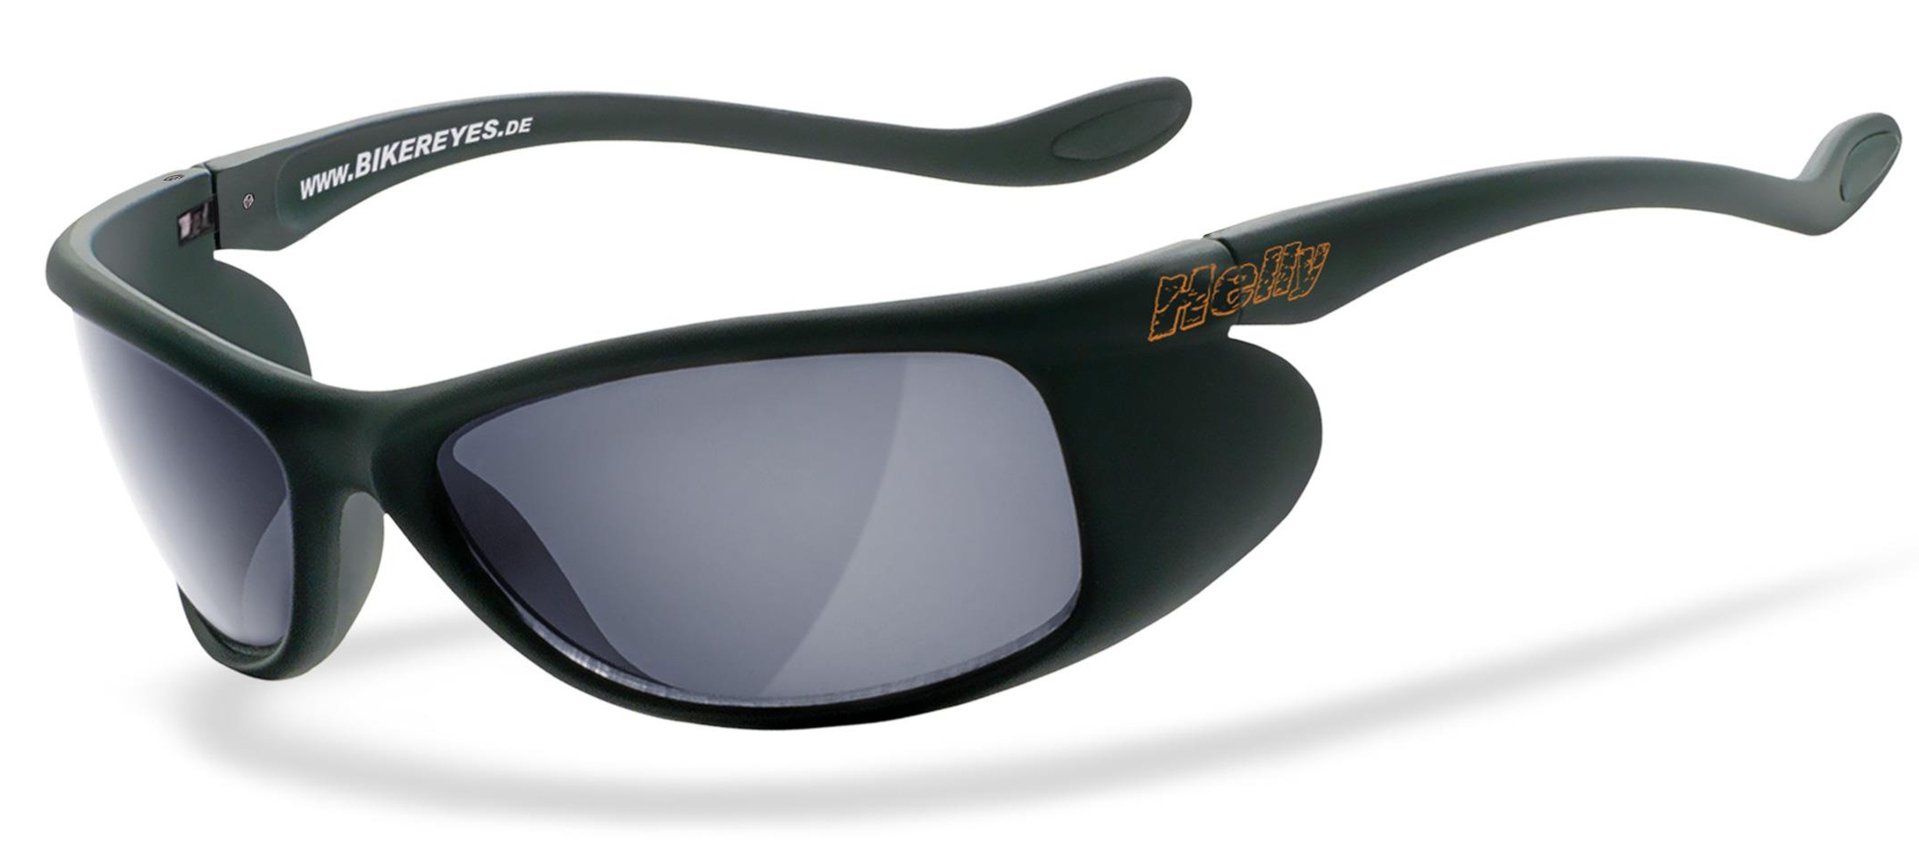 Helly Bikereyes Top Speed 4 Sunglasses, black, black, Size One Size